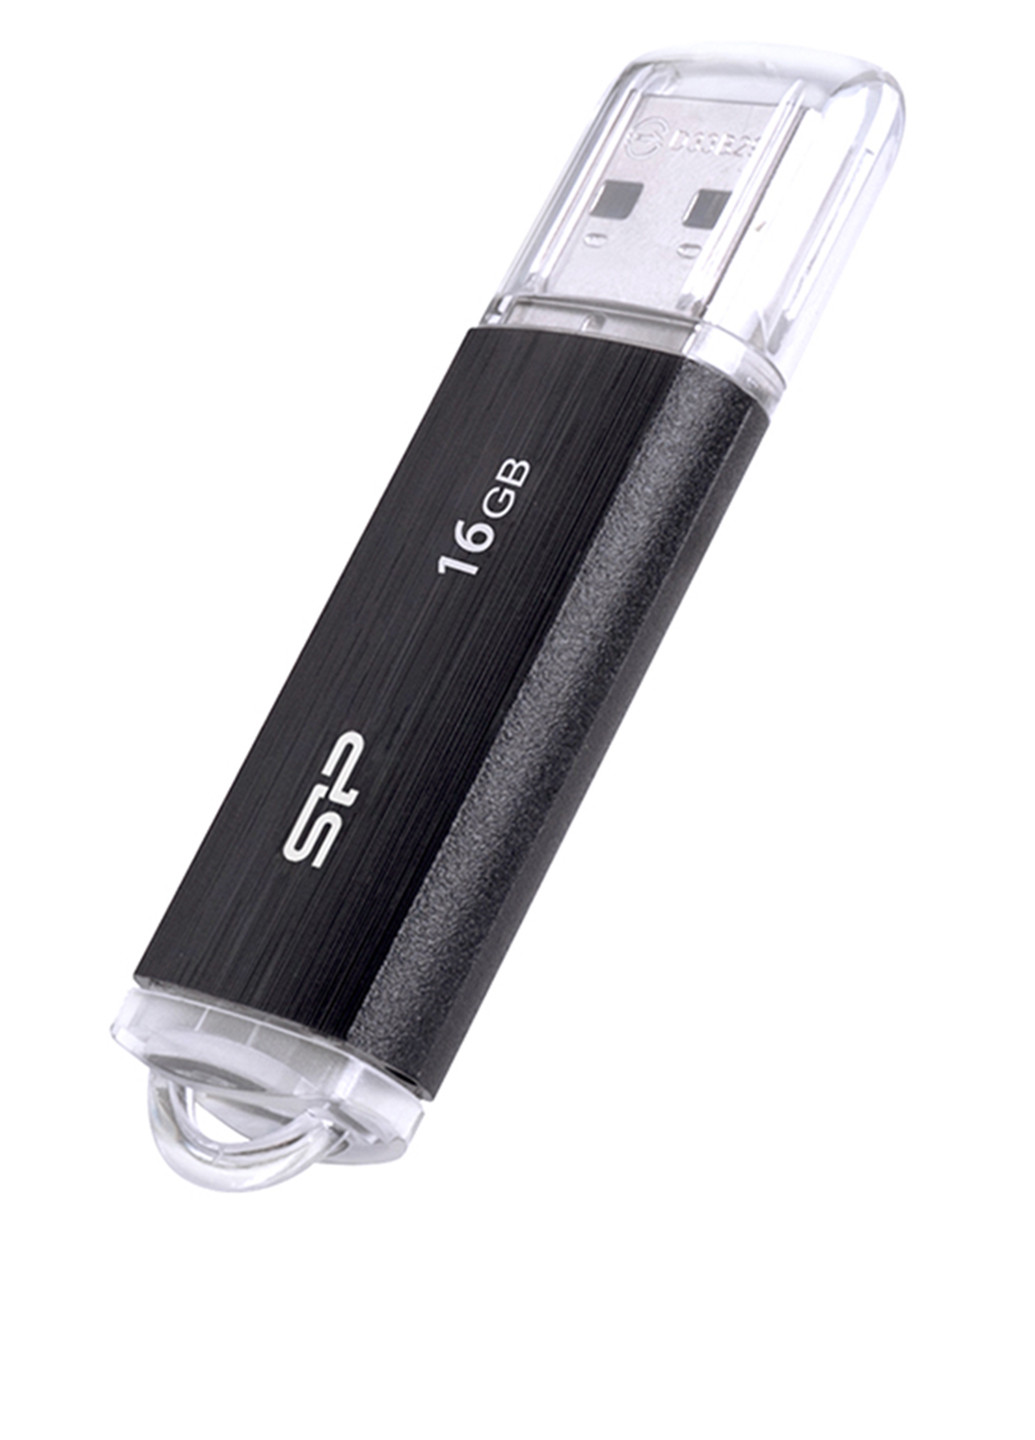 Флеш пам'ять USB Ultima U02 16GB USB 2.0 Black (SP016GBUF2U02V1K) Silicon Power флеш память usb silicon power ultima u02 16gb usb 2.0 black (sp016gbuf2u02v1k) (130221133)